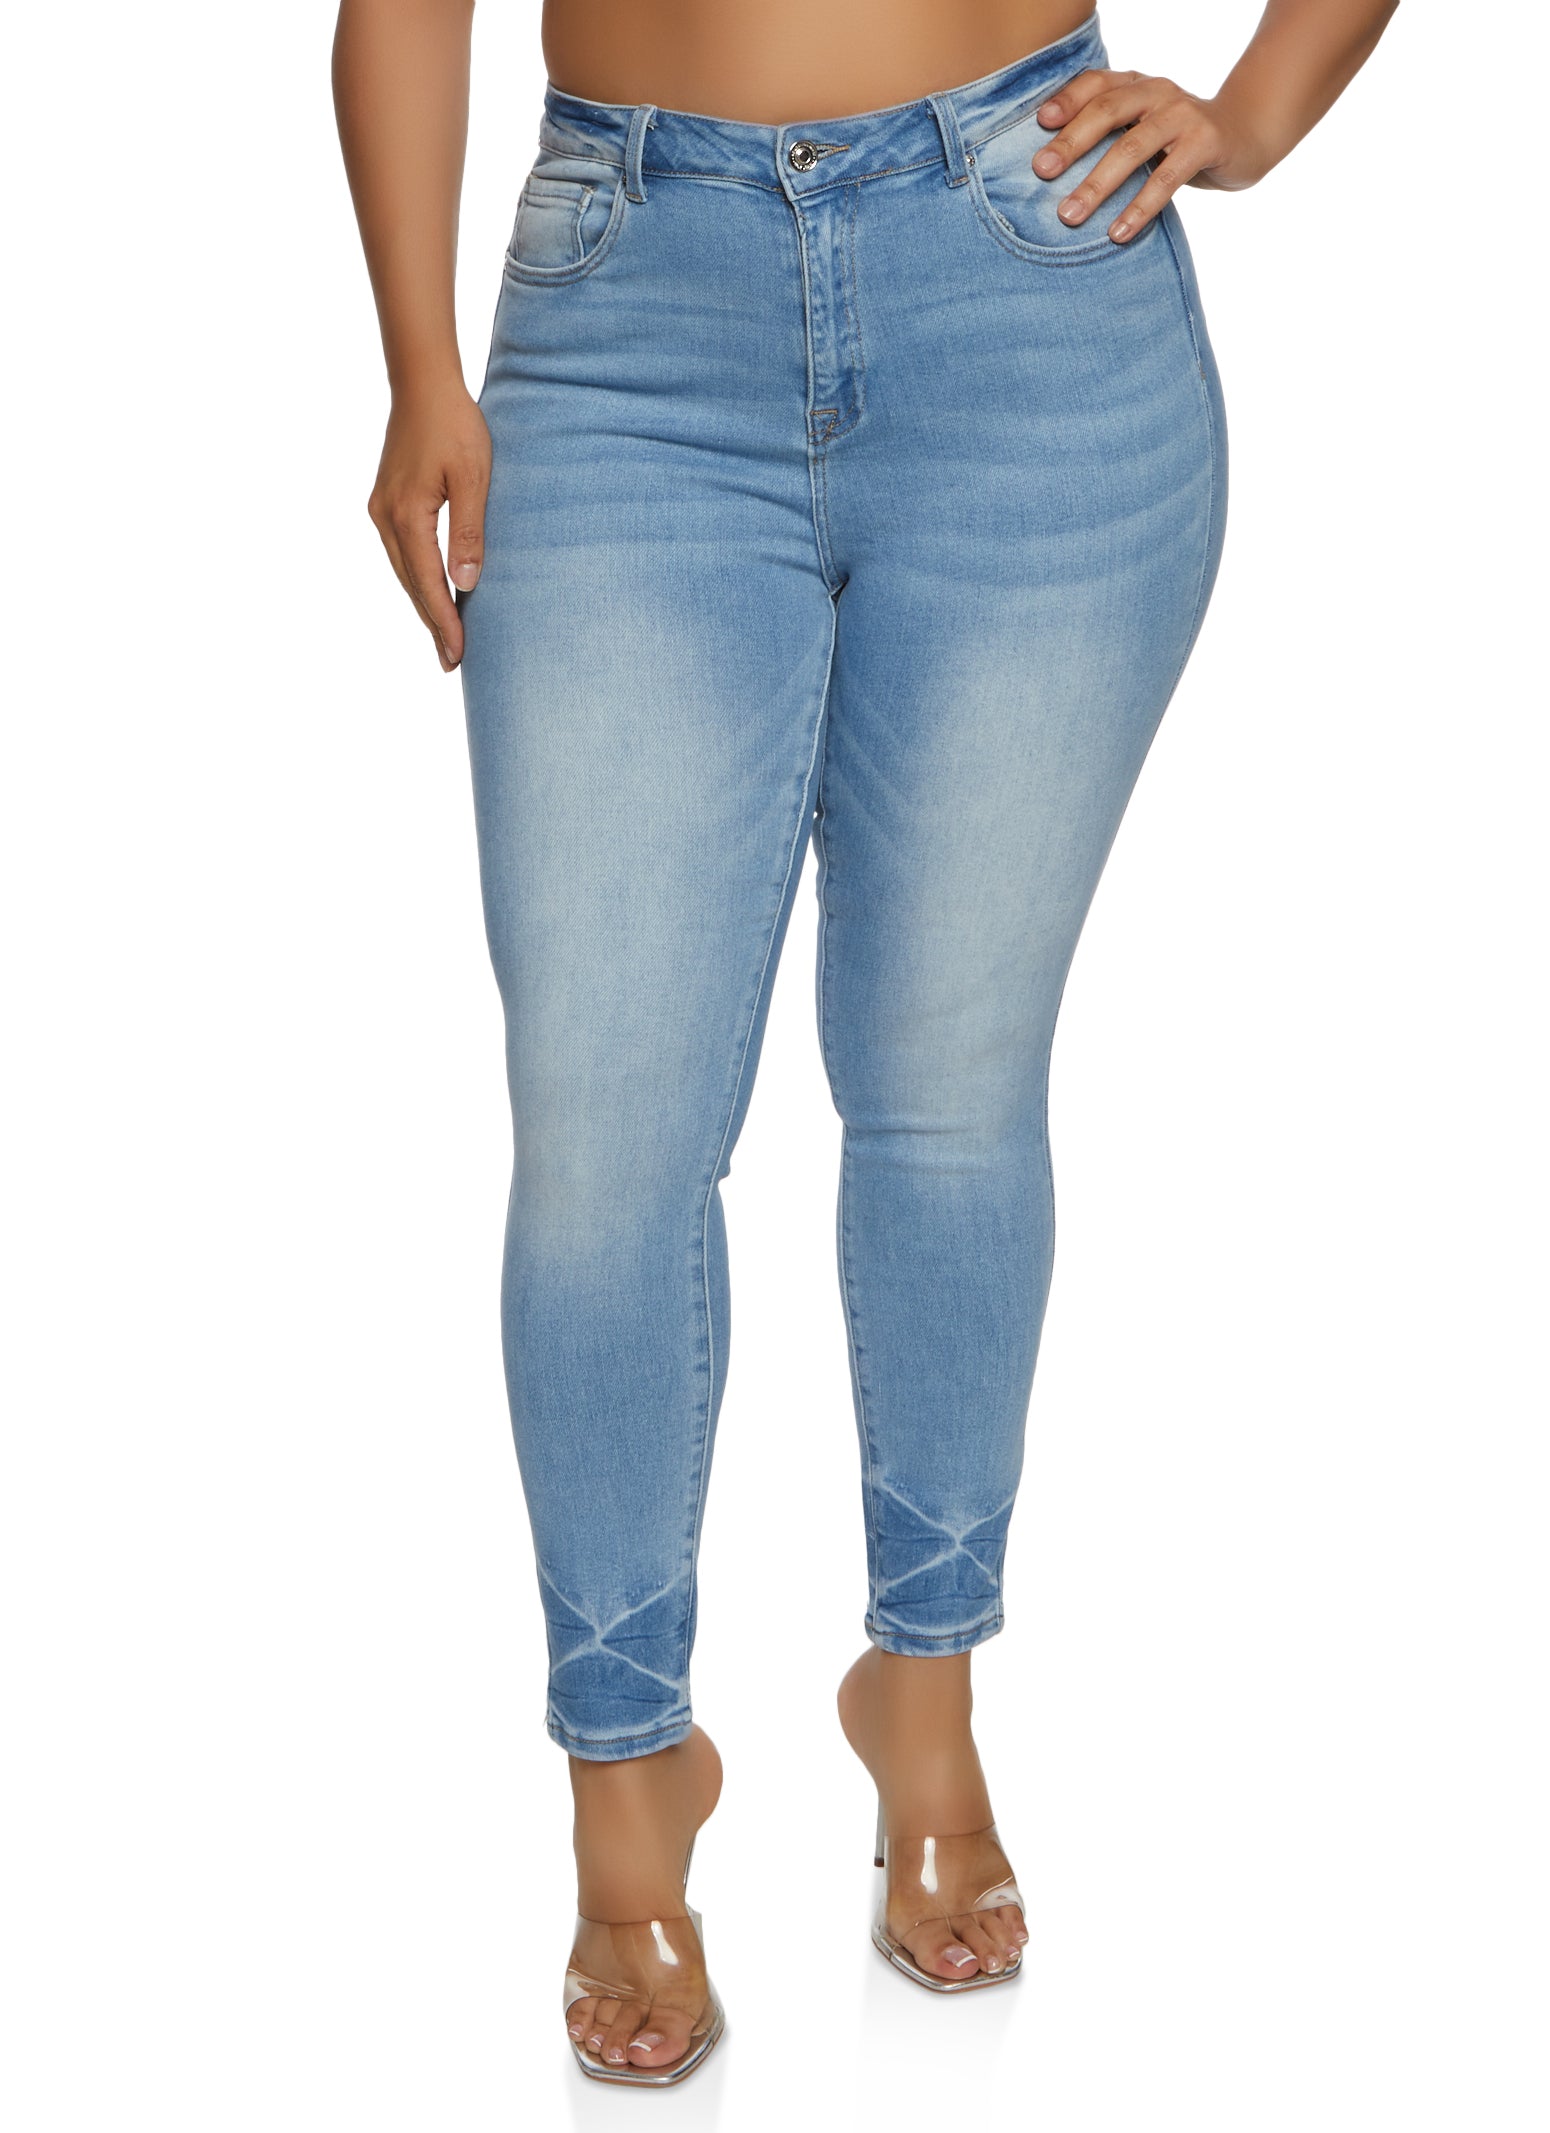 Express Women's Slim Super High Rise Blue Silver Metallic Jeans Size 6